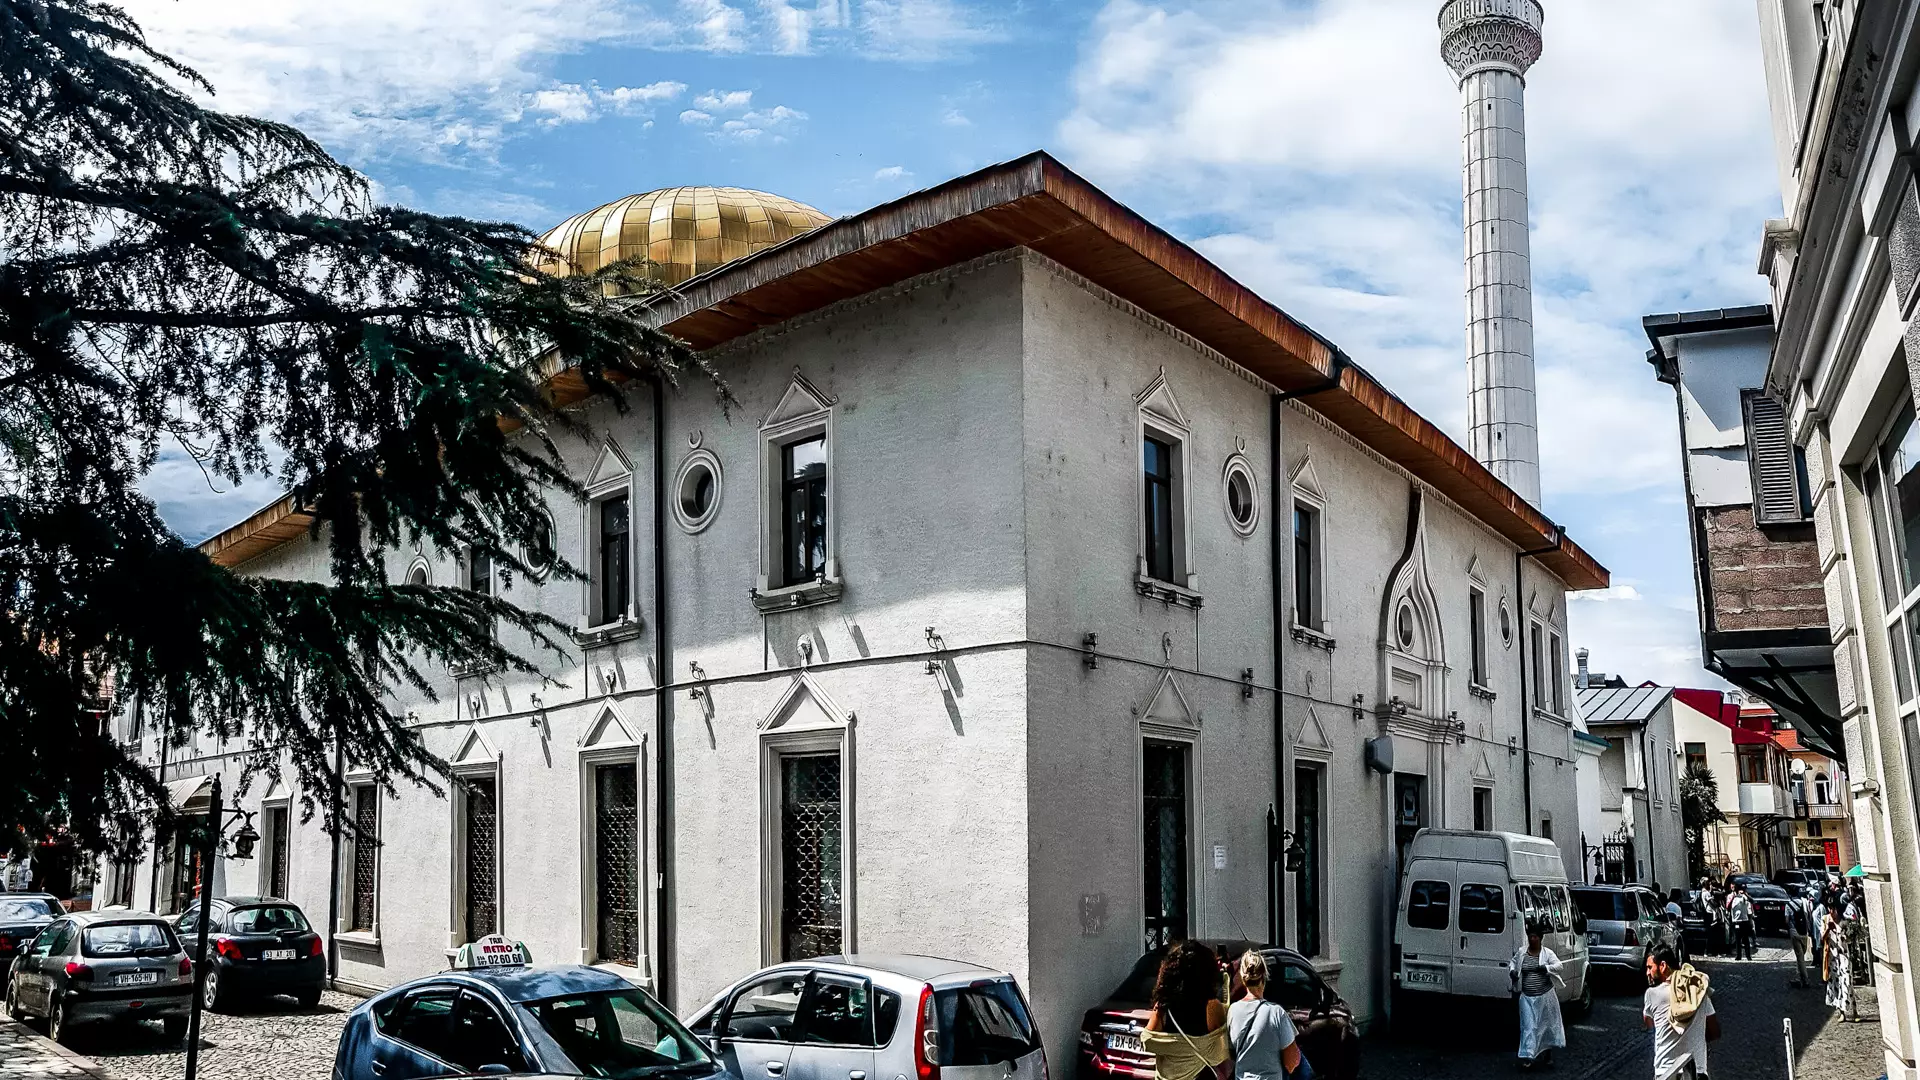 "Orta Jame" Mosque